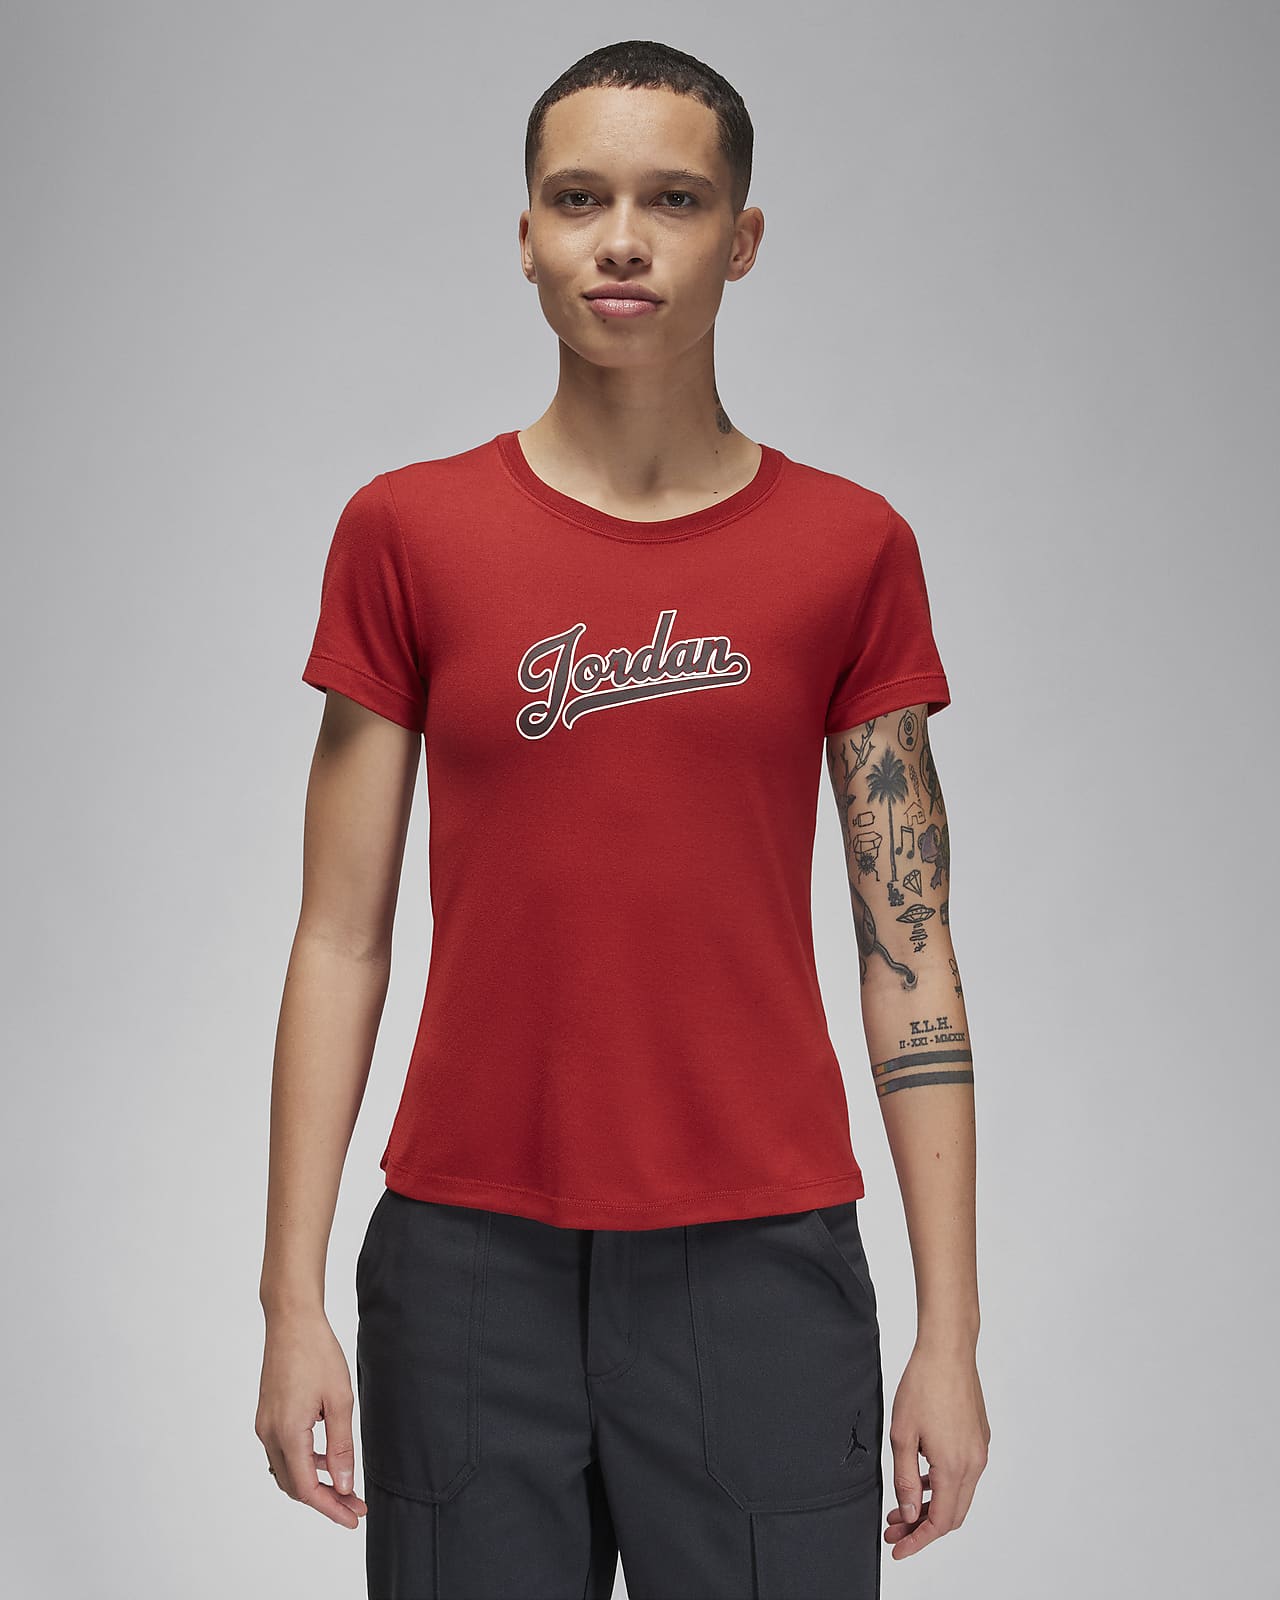 Slank Jordan-T-shirt til kvinder